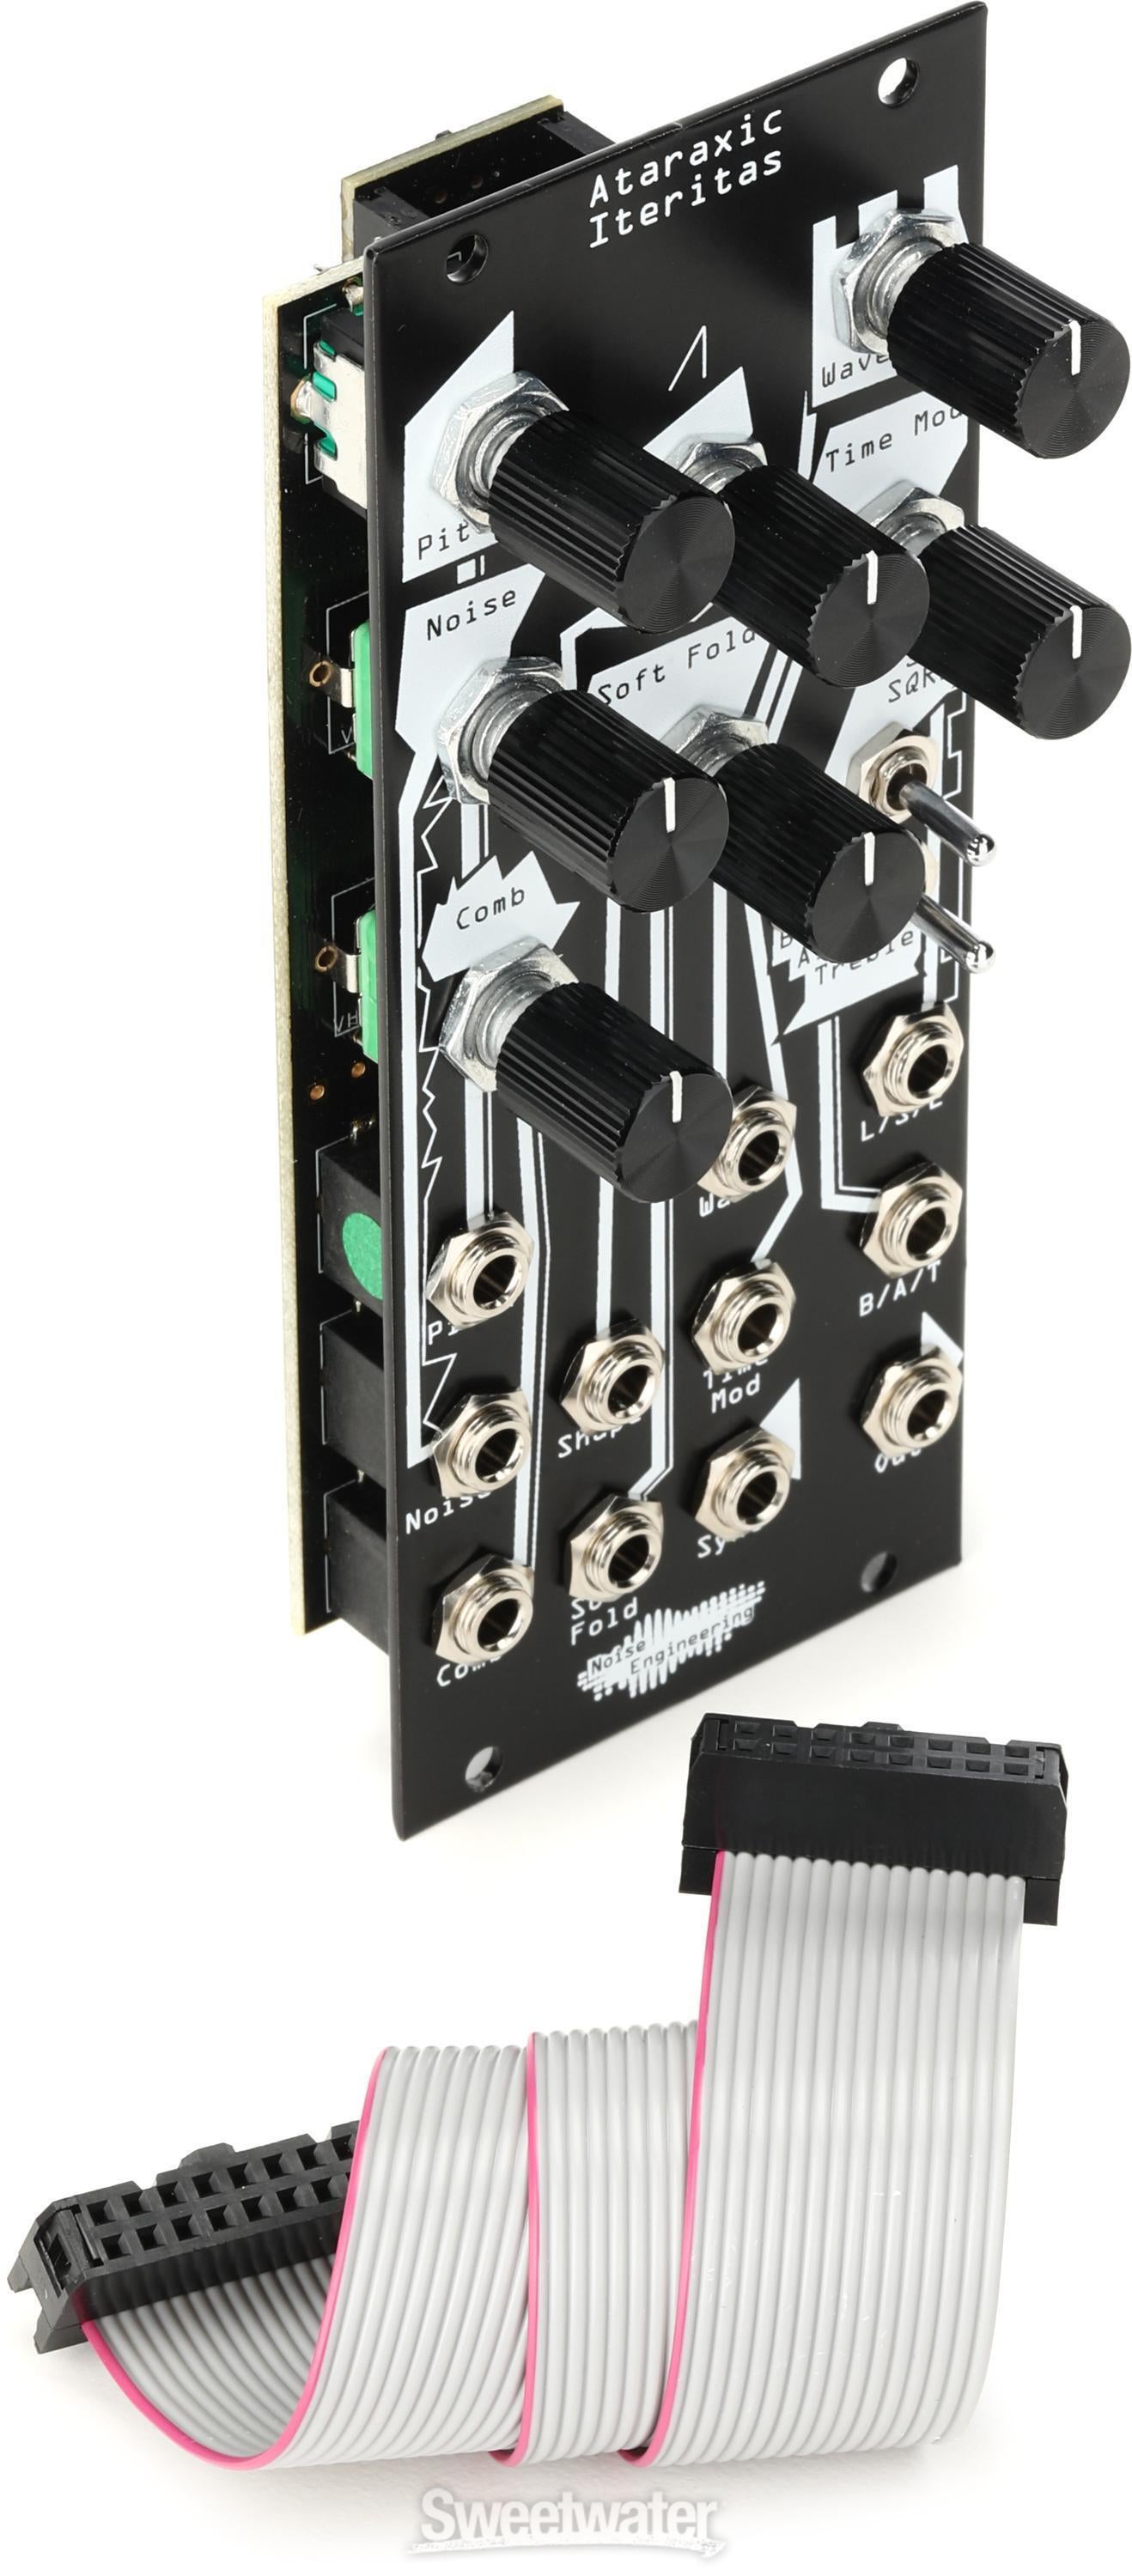 Noise Engineering Ataraxic Iteritas Digital Oscillator Eurorack Module -  Black | Sweetwater